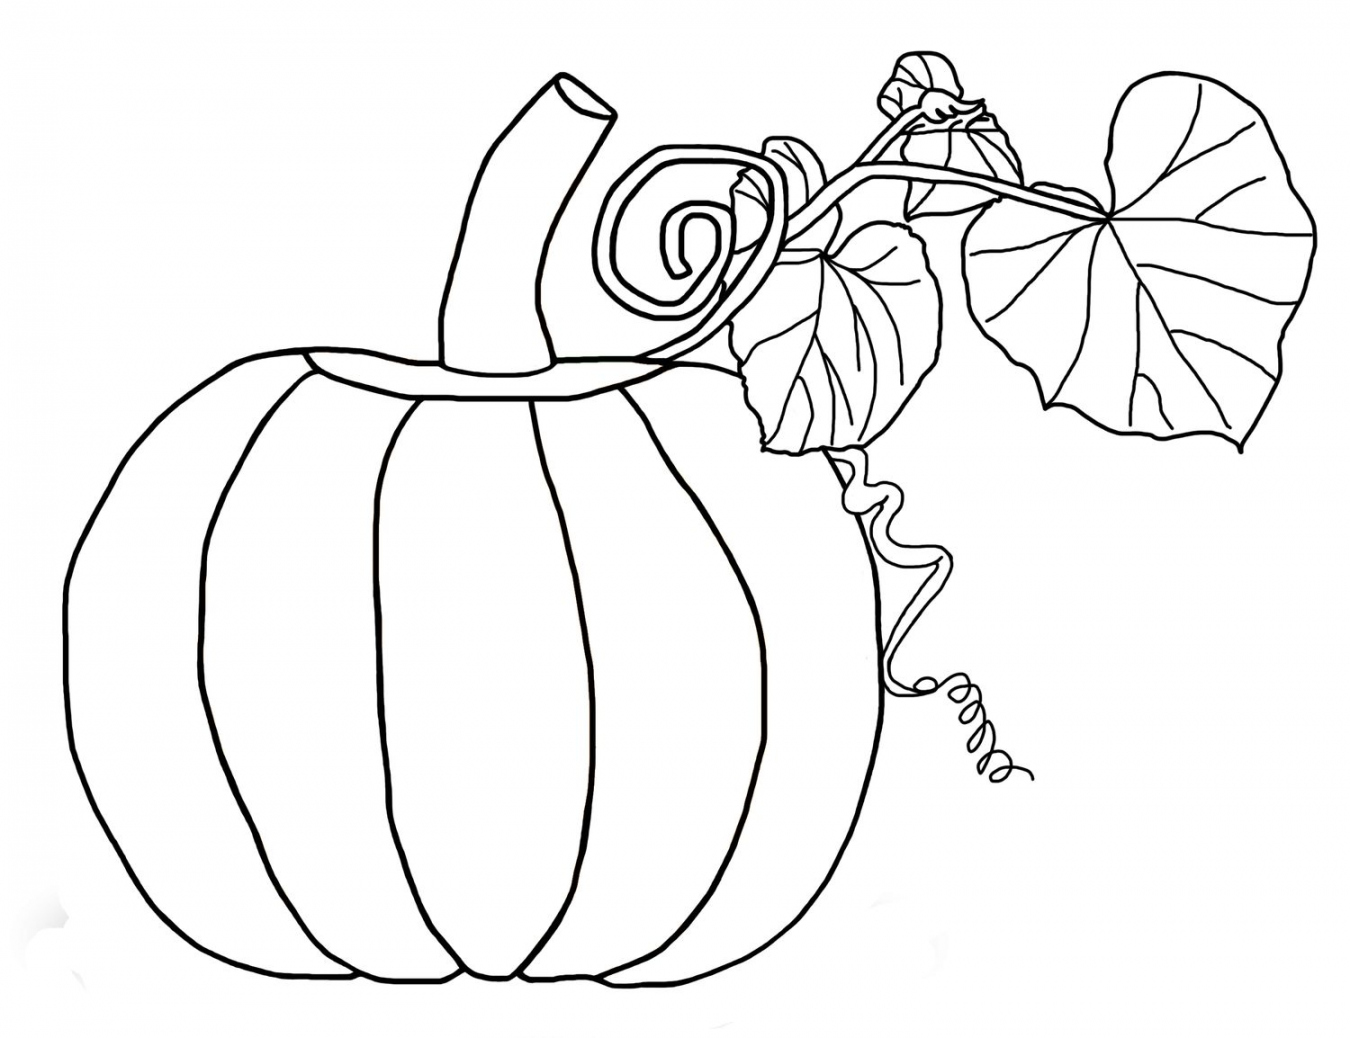 Free Pumpkin Coloring Pages for Kids - FREE Printables - Pumpkin Printables